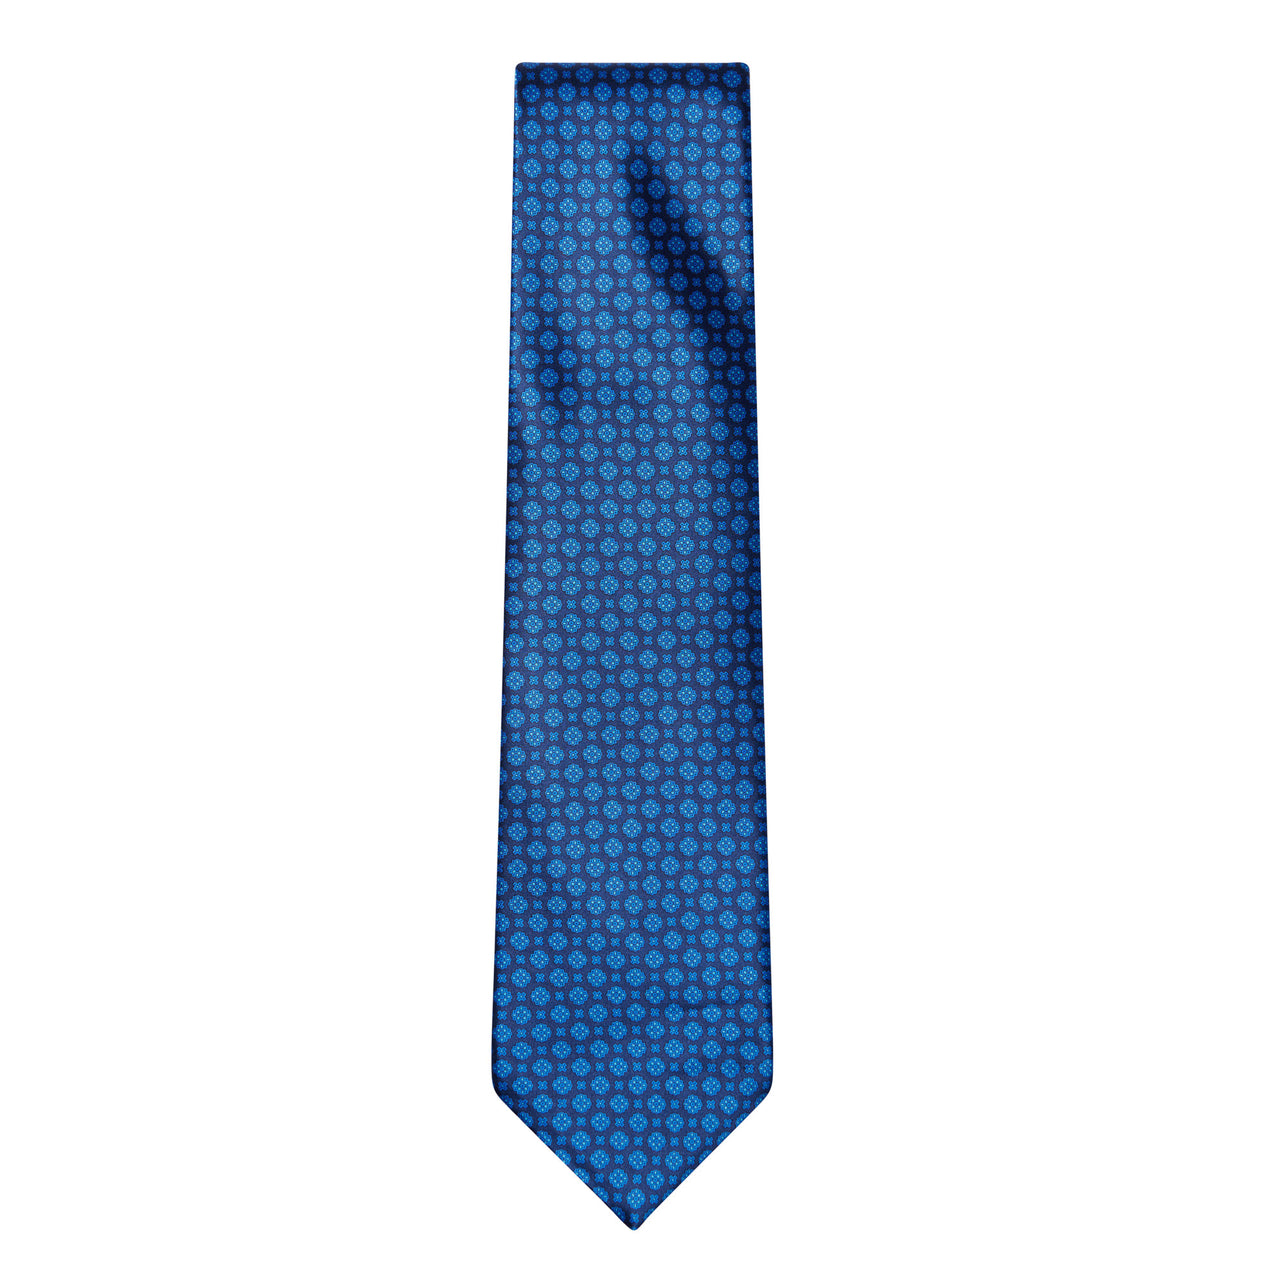 STEFANO RICCI Silk Tie NAVY/BLUE